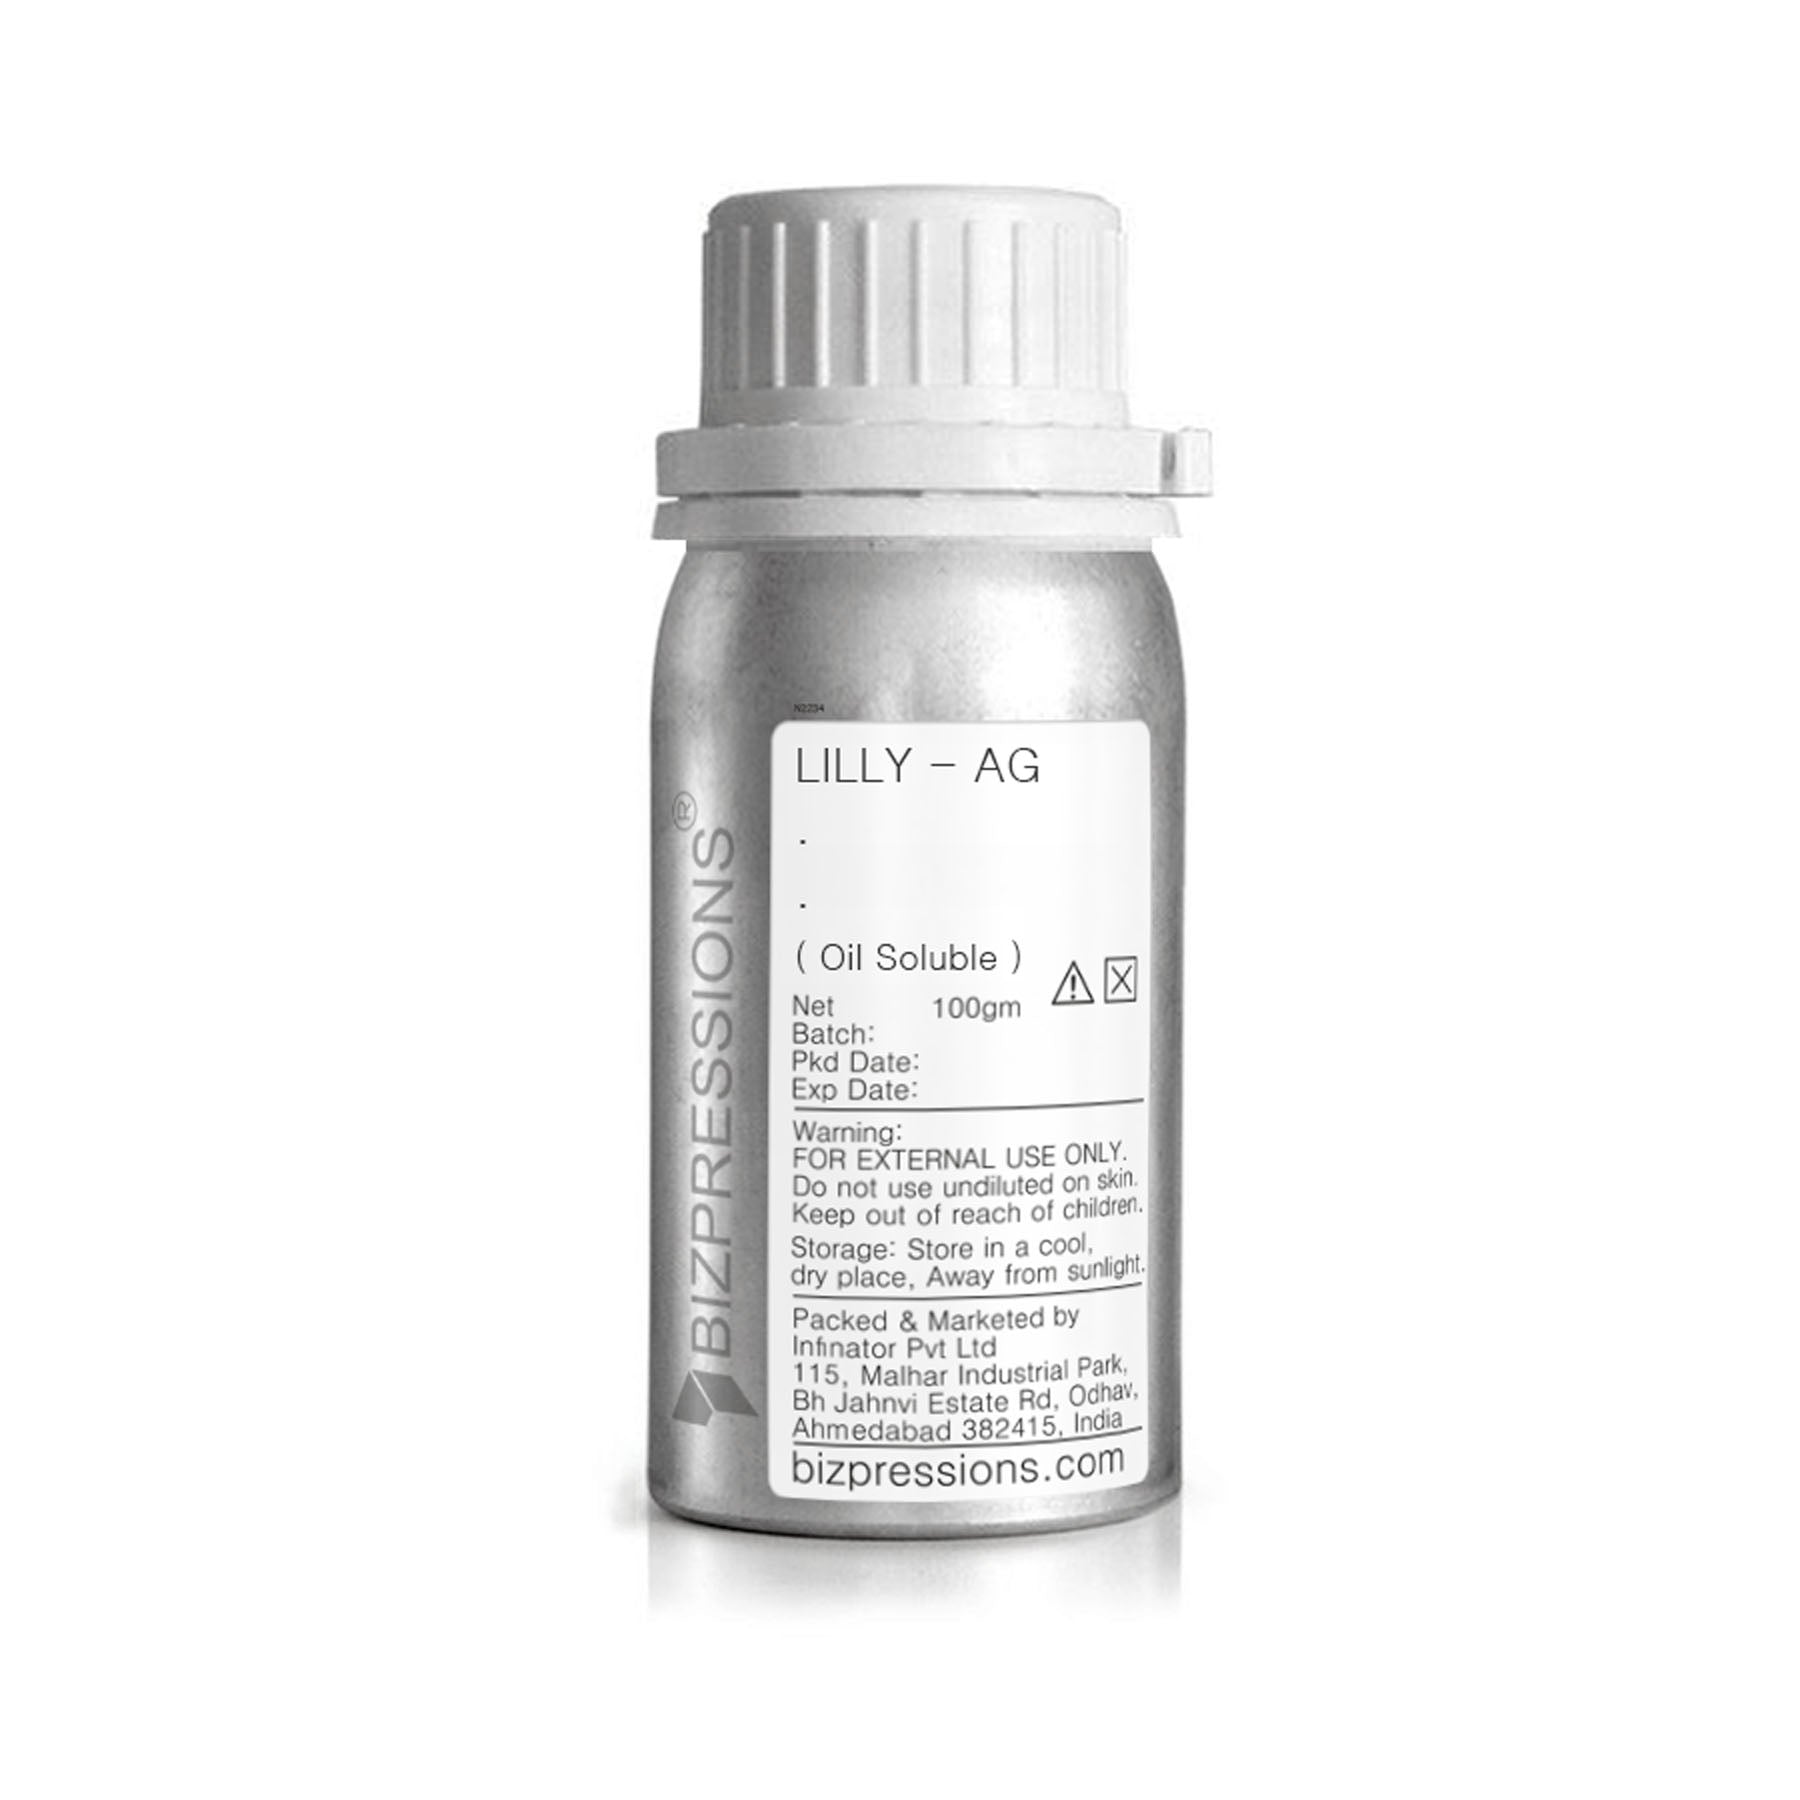 LILLY - AG - Fragrance ( Oil Soluble ) - 100 gm